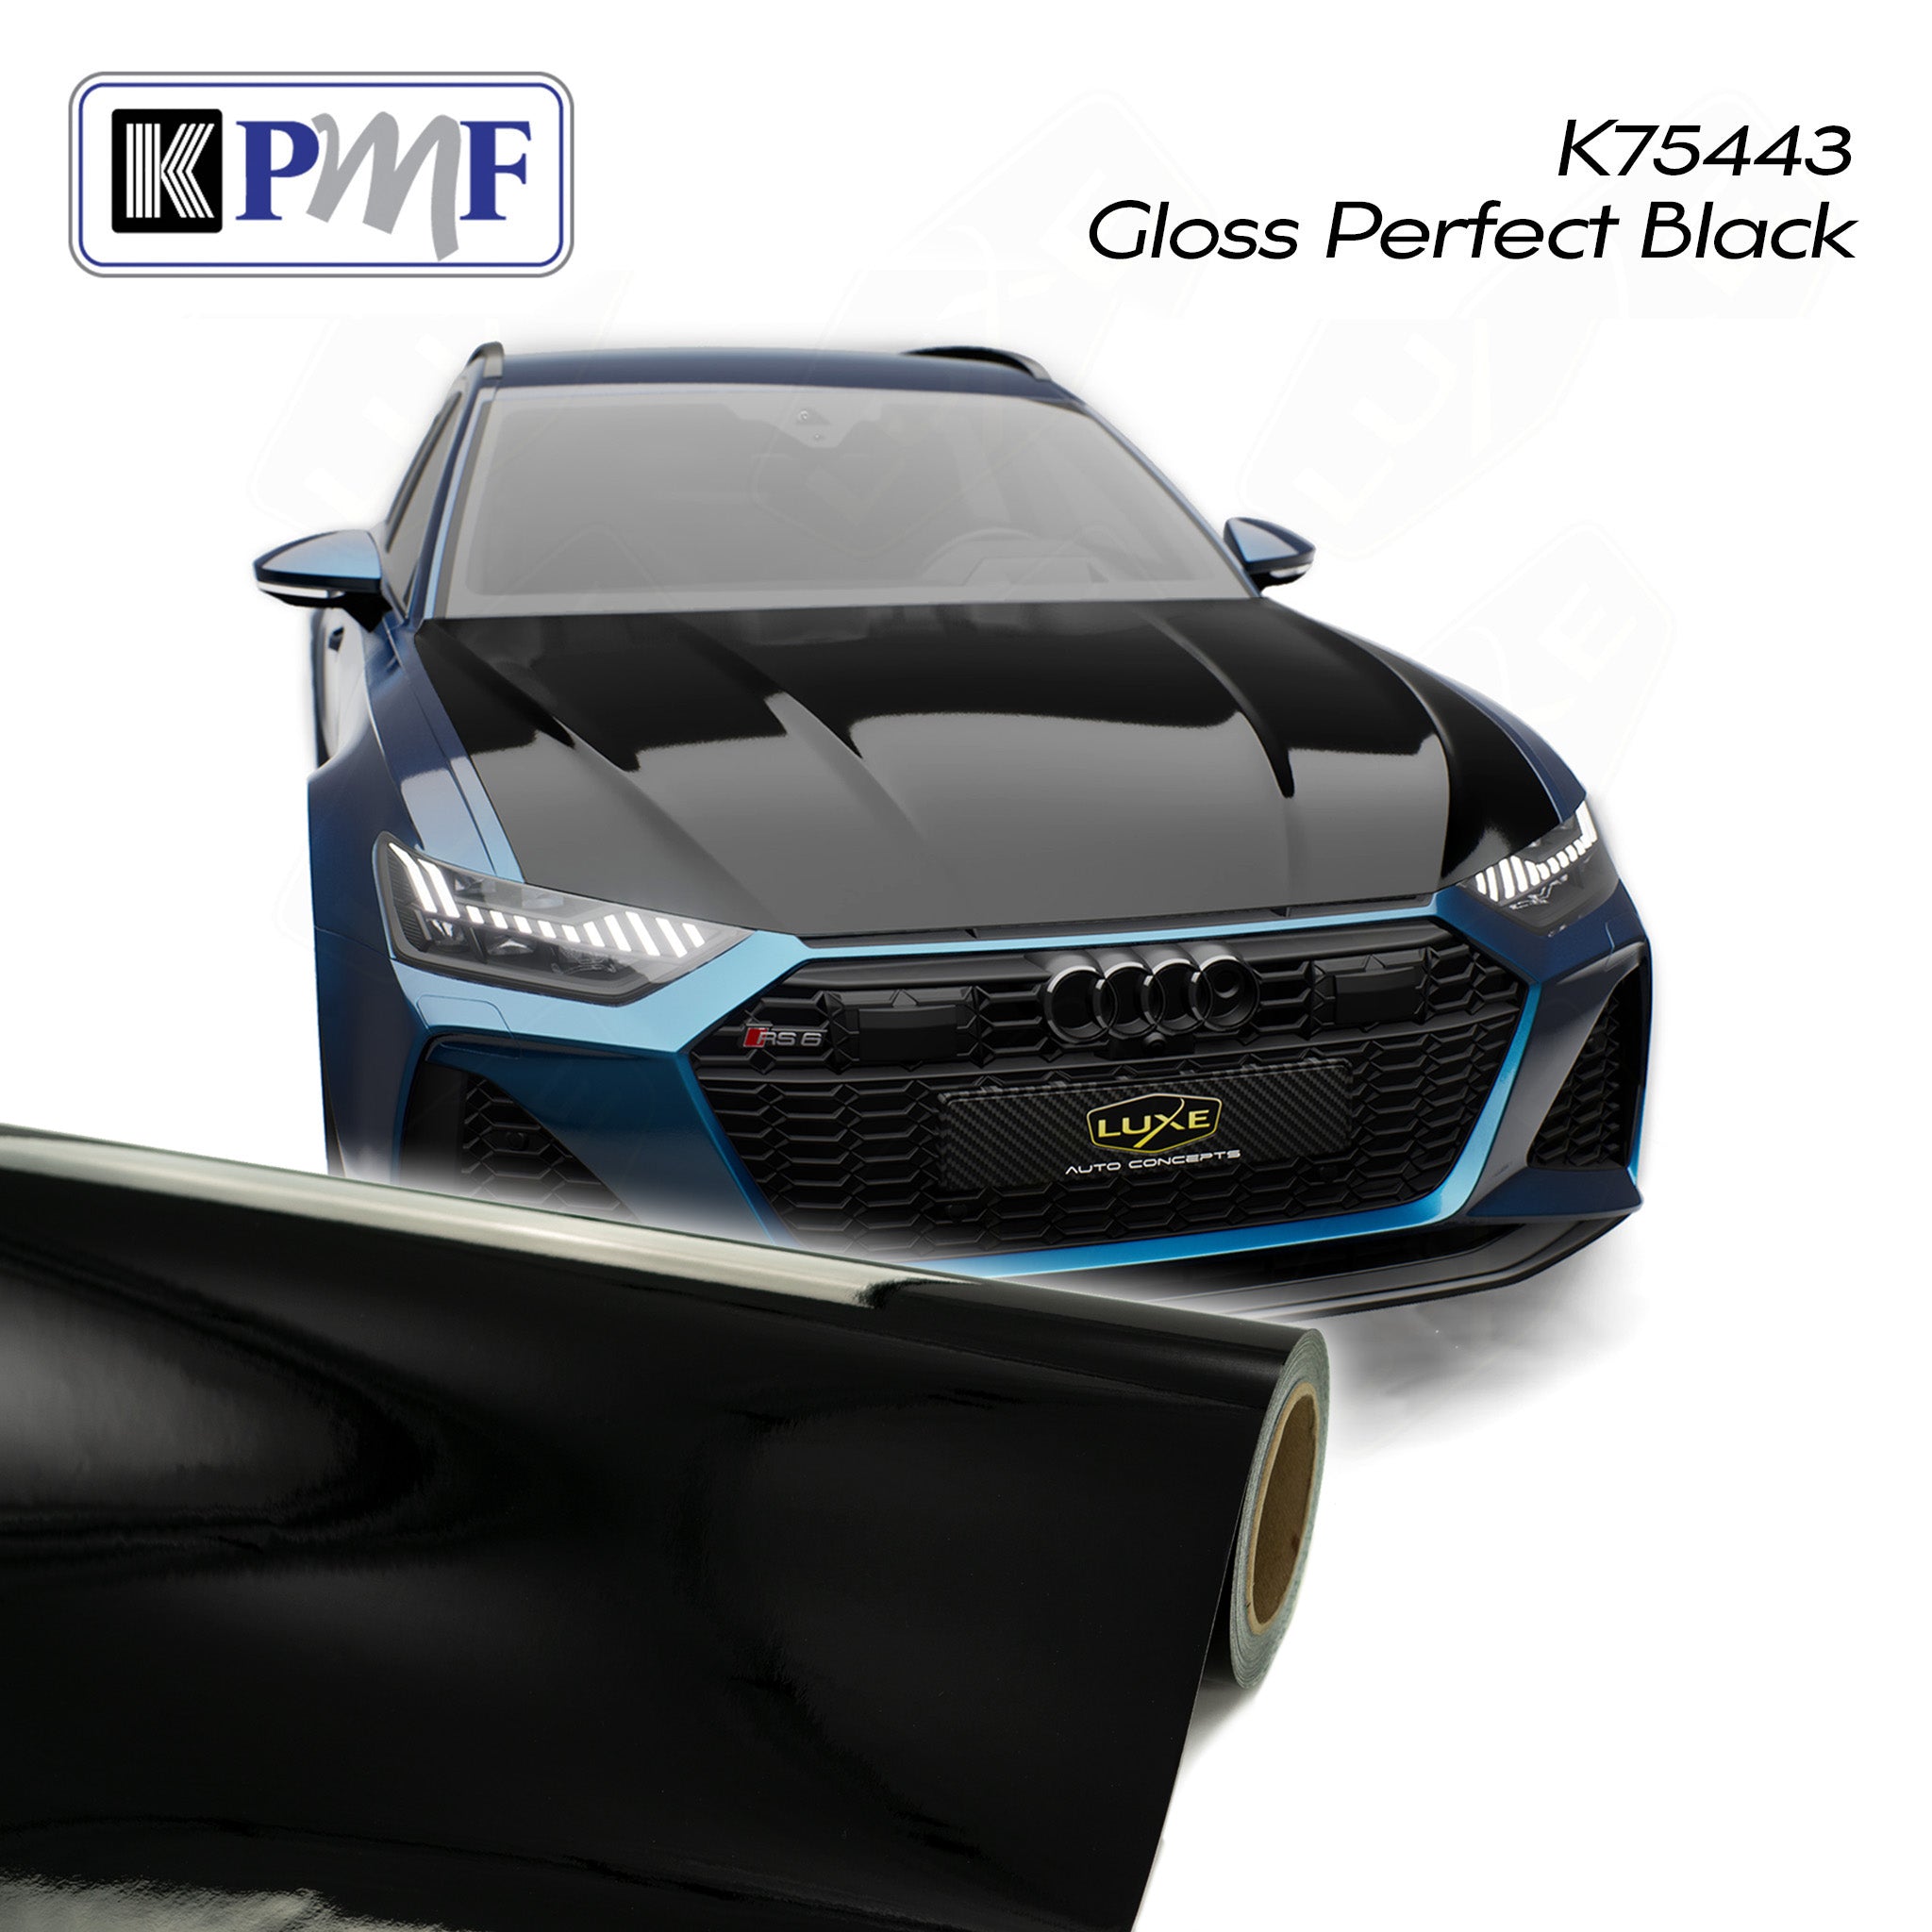 KPMF Gloss Perfect Black Wrap Vinyl - K75443 - LightWrap